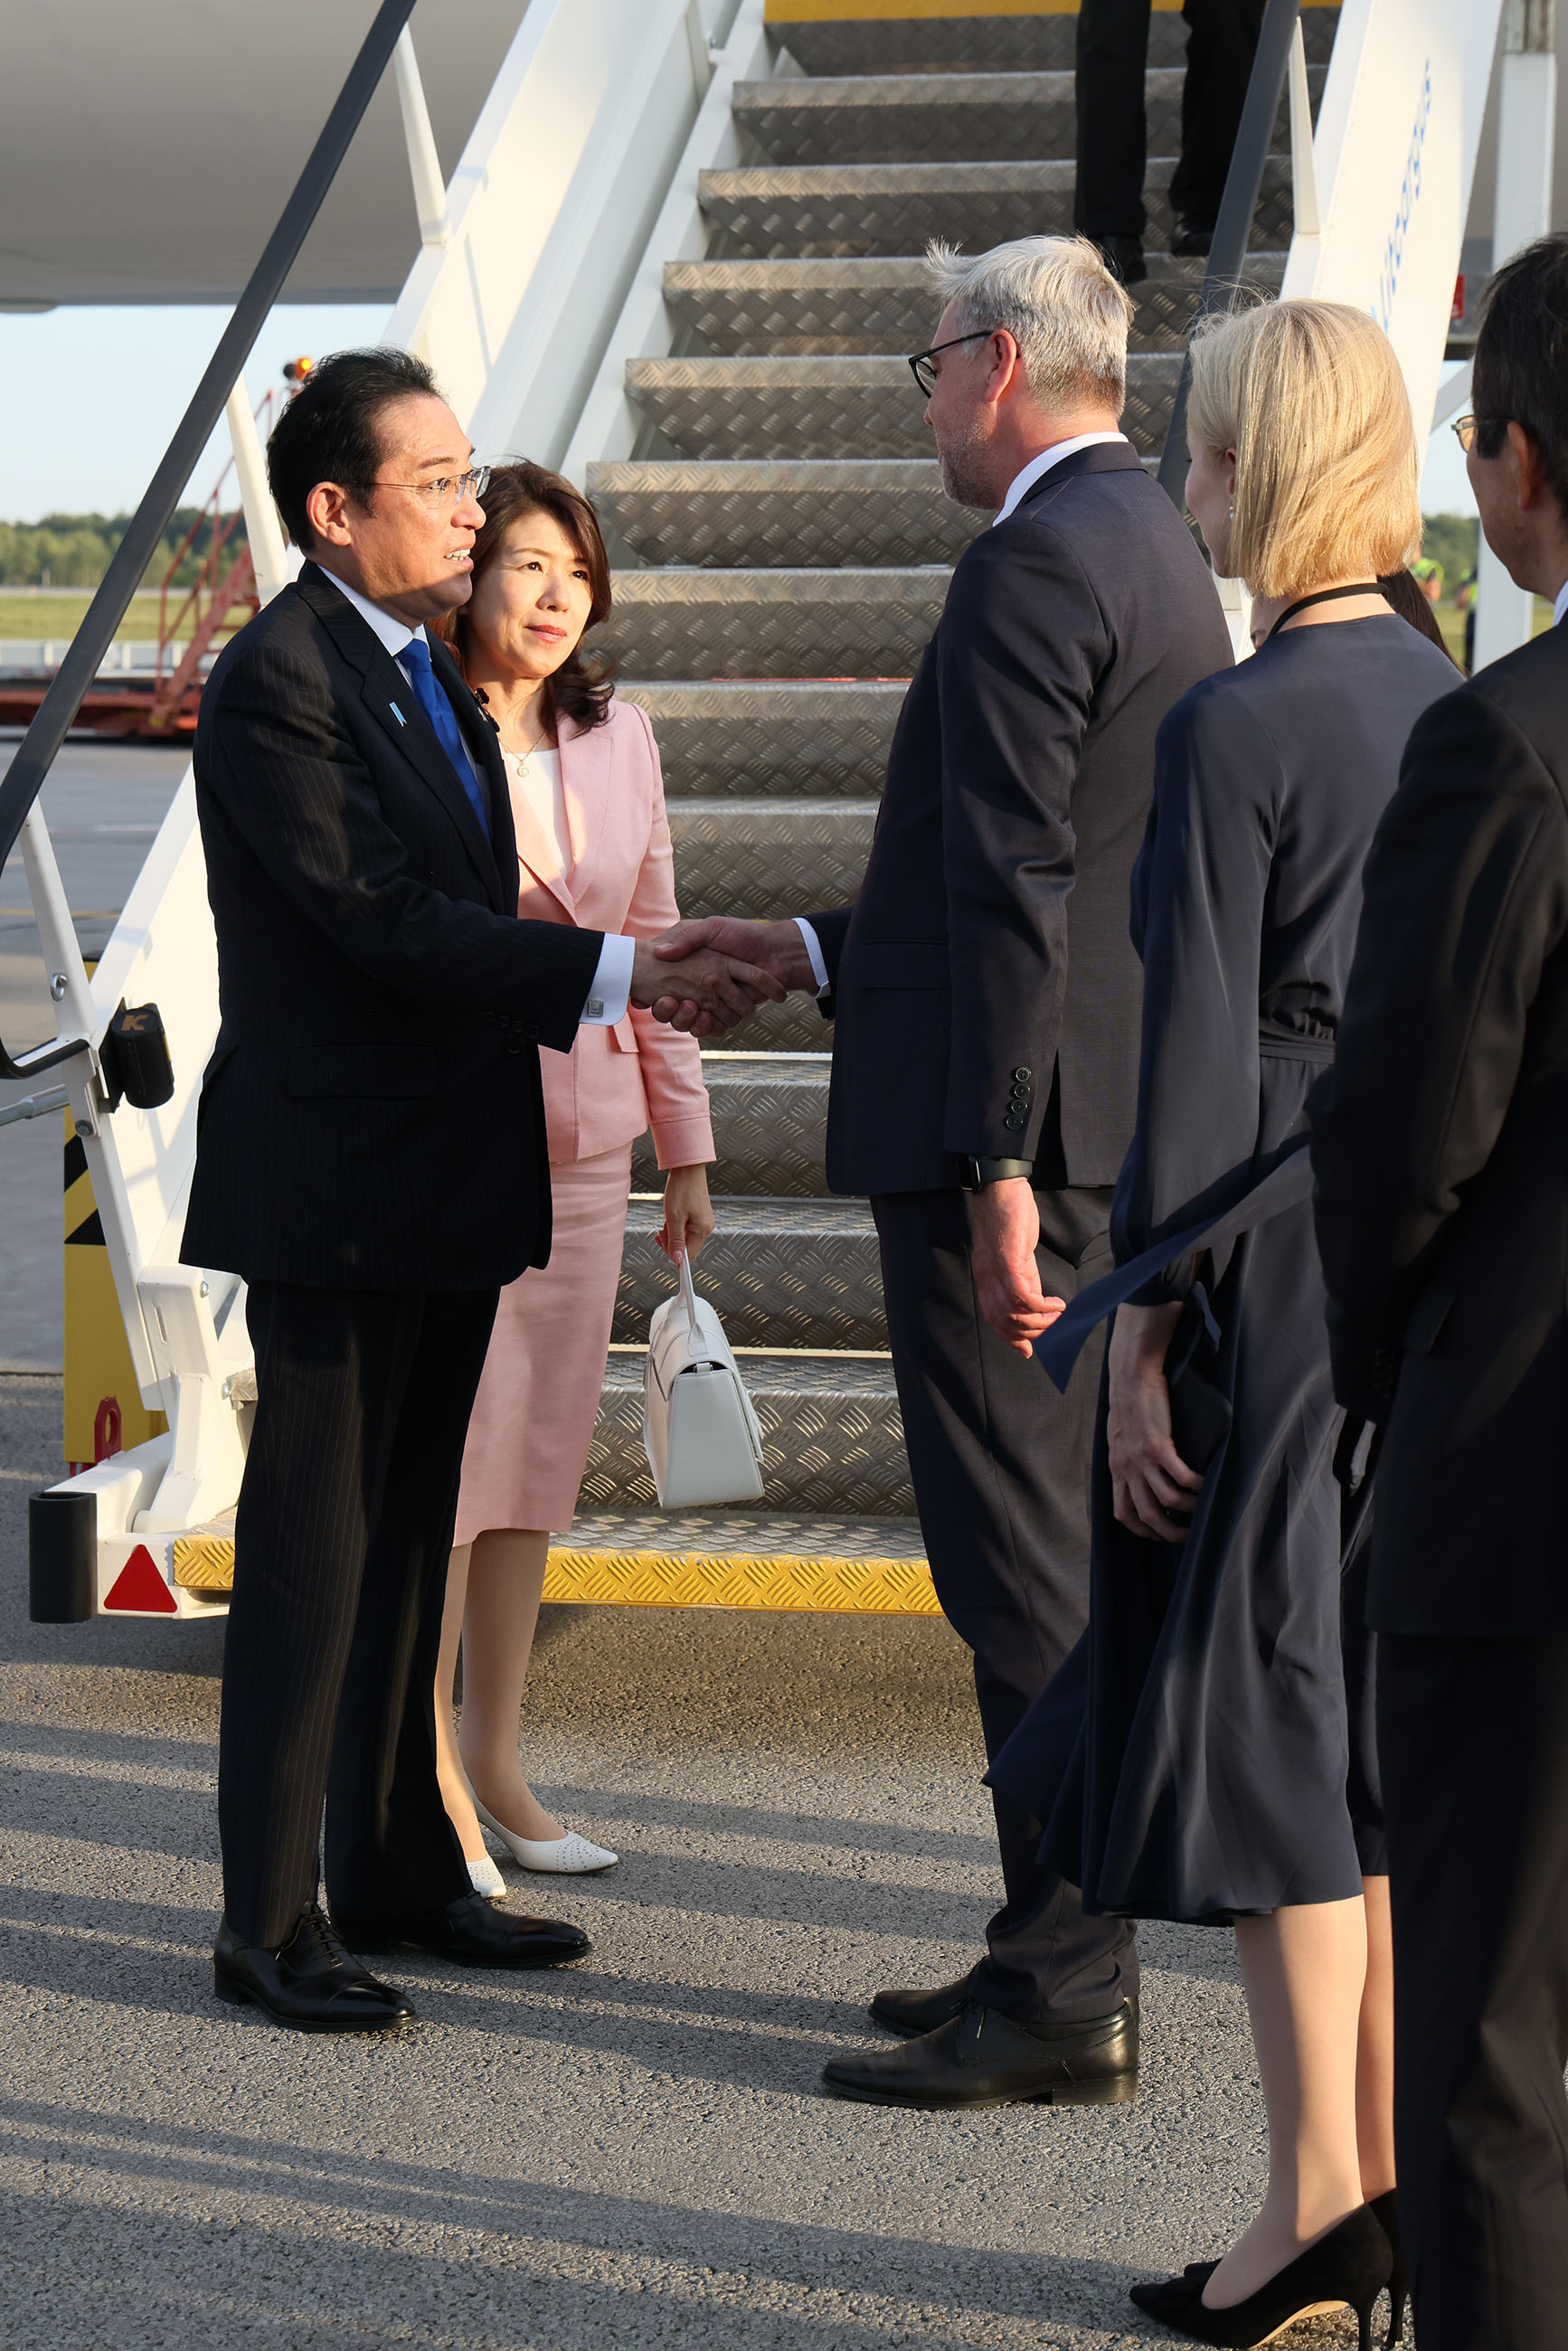 Prime Minister Kishida arriving in Lithuania